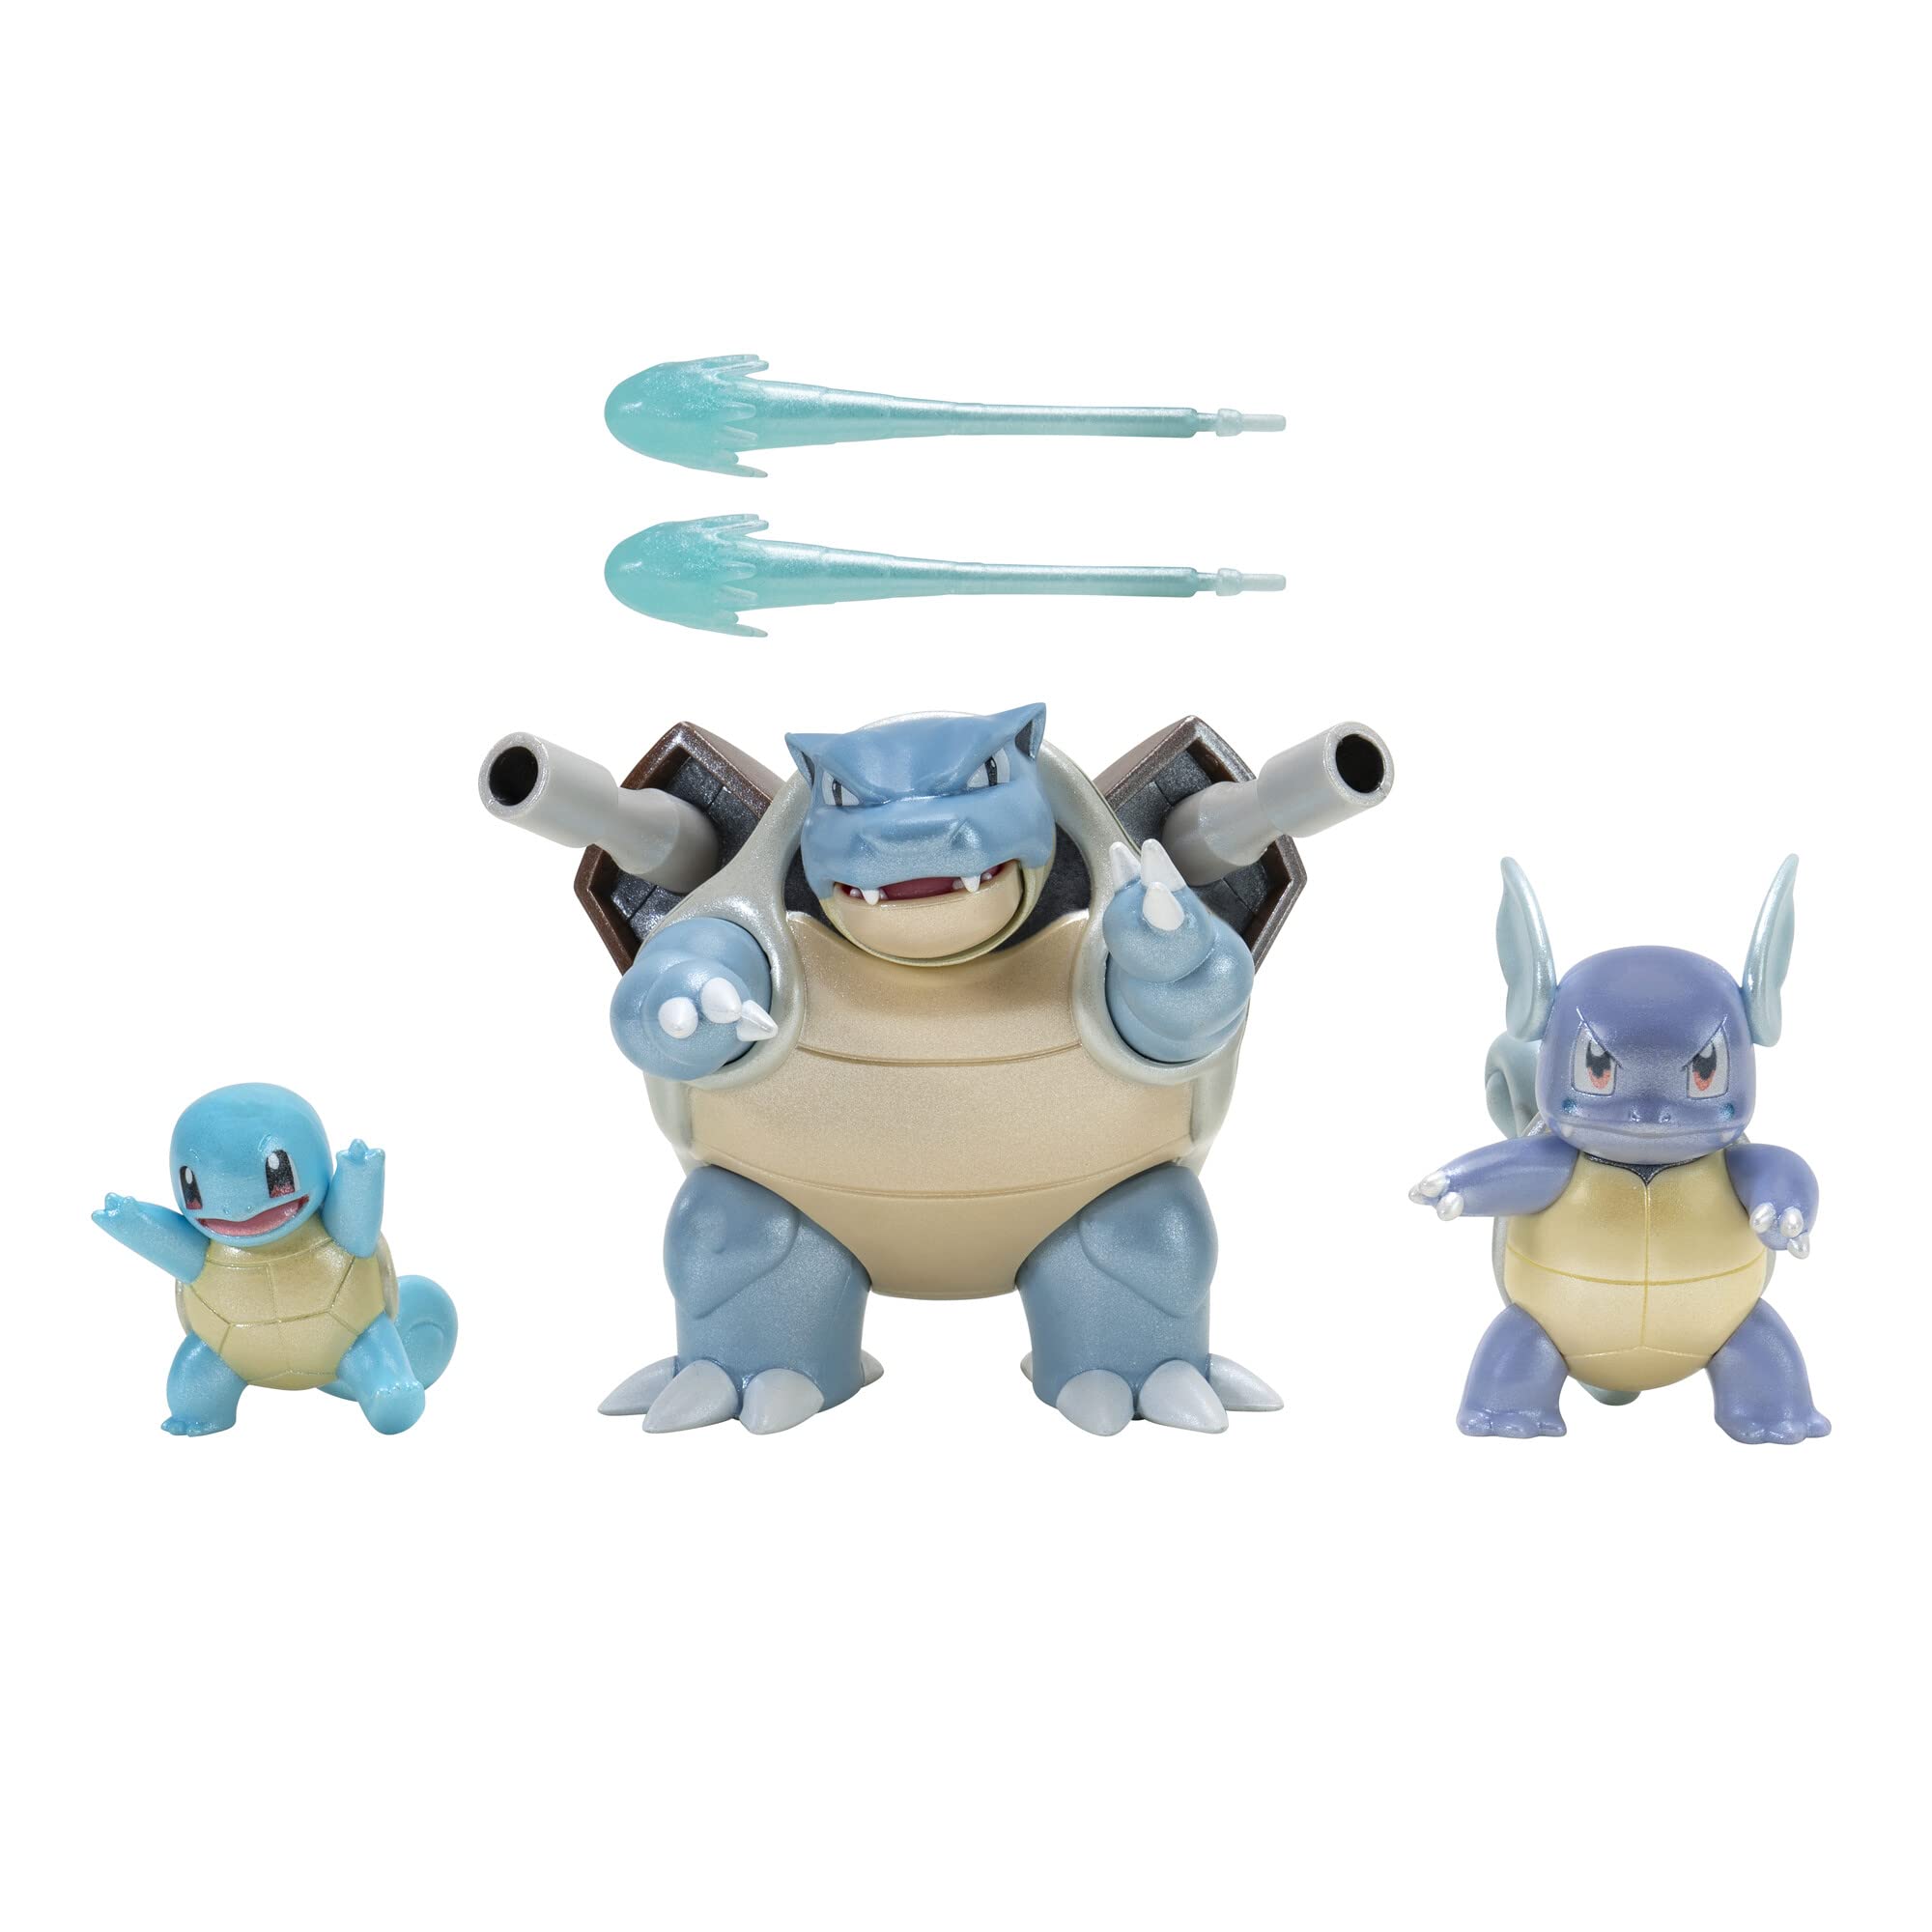 Pokémon Select Evolution 3 Pack - Features 2-Inch Squirtle, 3-Inch Wartortle & 4.5-Inch Blastoise Battle Figures - Authentic Details